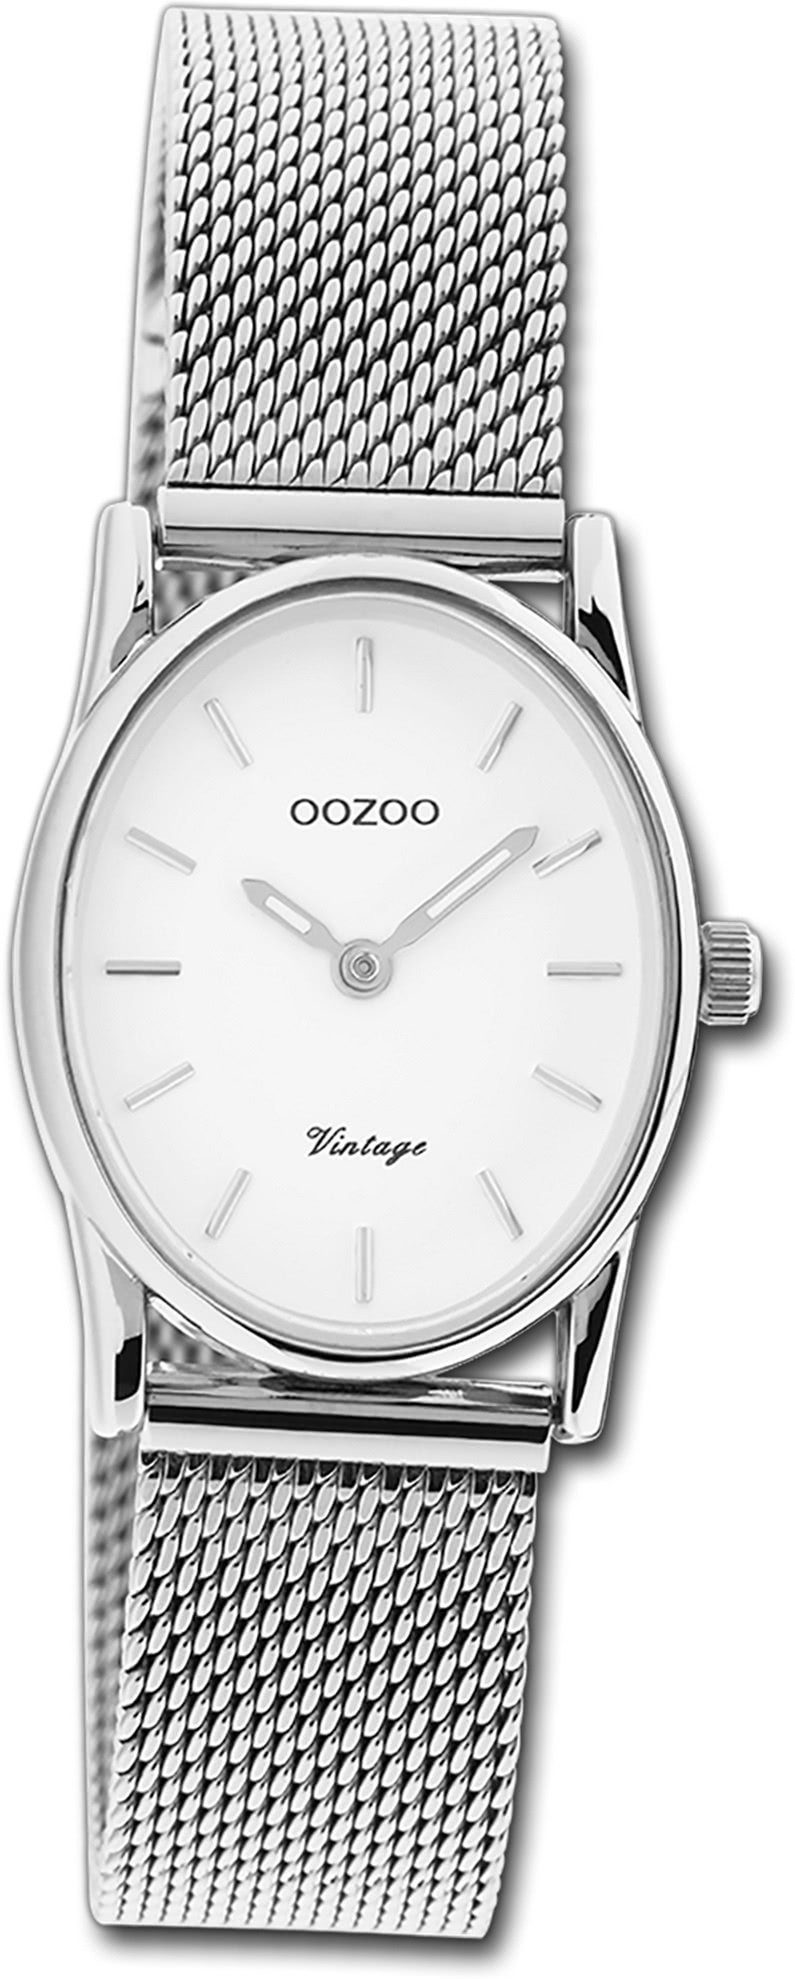 OOZOO silber, Oozoo Series, Gehäuse, Metall, Damenuhr klein Mesharmband ovales Damen Armbanduhr (22,5x28mm) Quarzuhr Vintage